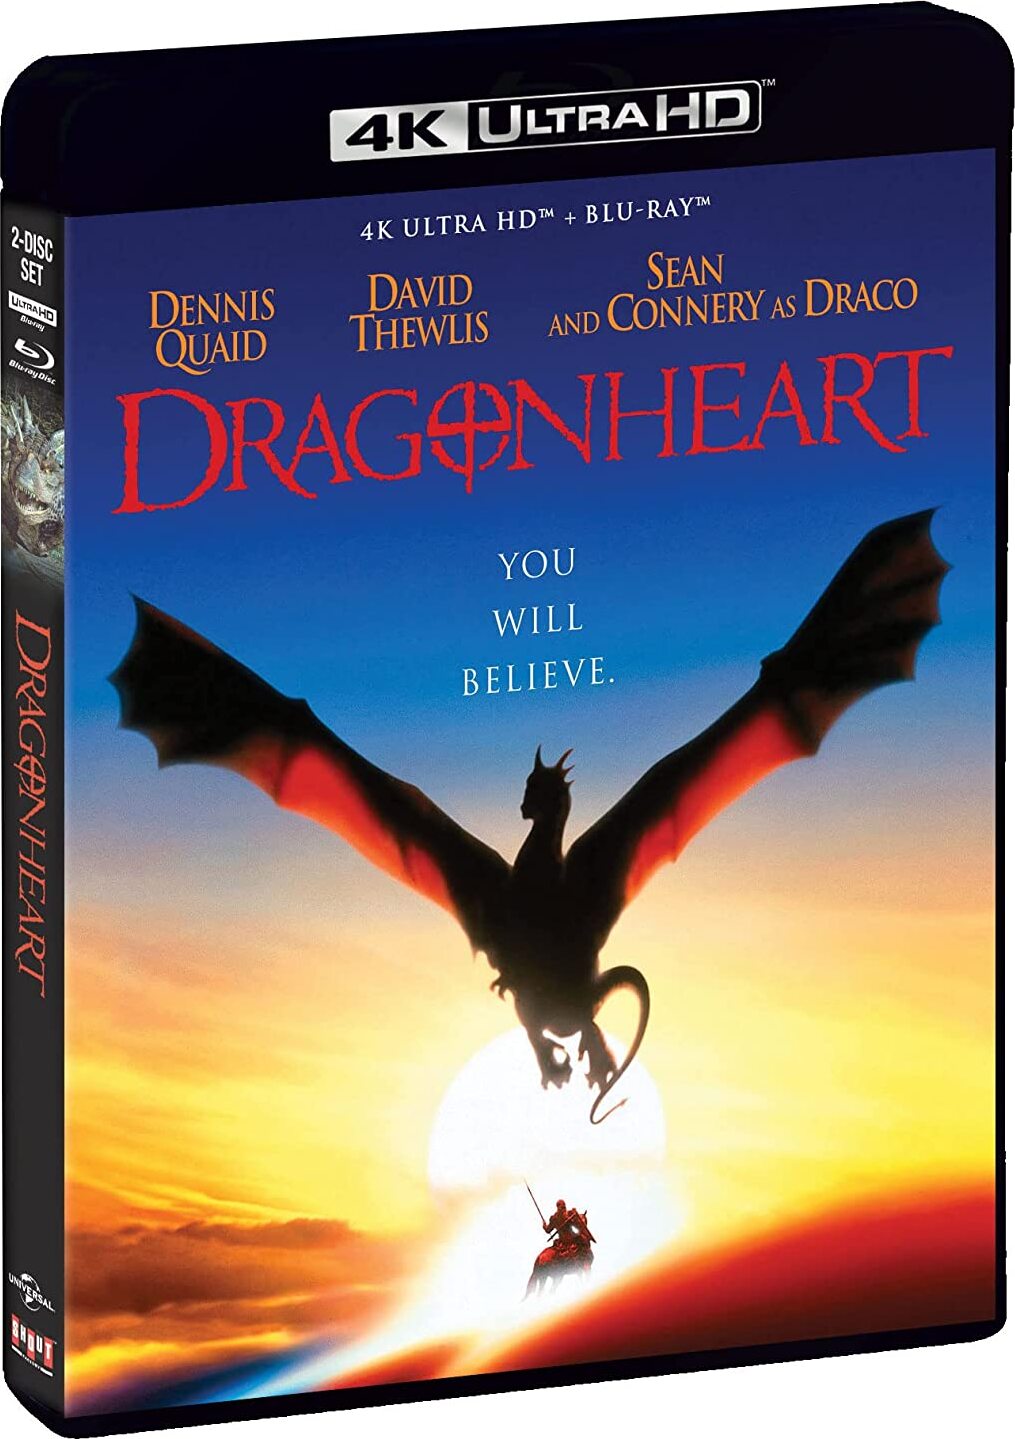 DragonHeart 4K (1996) de Rob Cohen - front cover